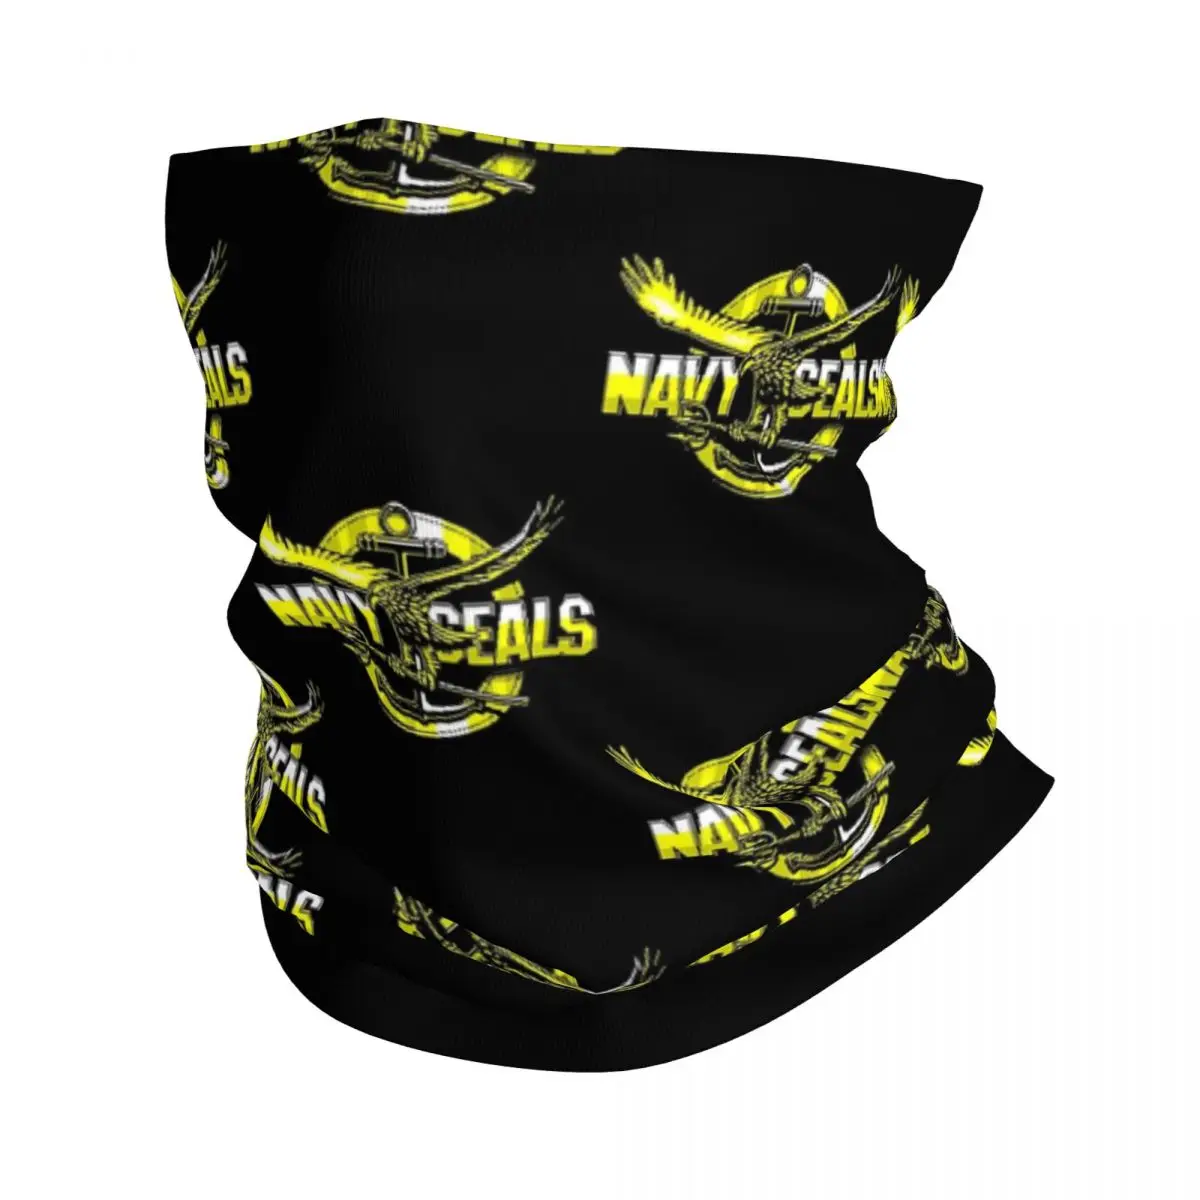 

USA Navy SEALs Bandana Neck Gaiter Printed Mask Scarf Multi-use Headband Running For Men Women Adult Breathable